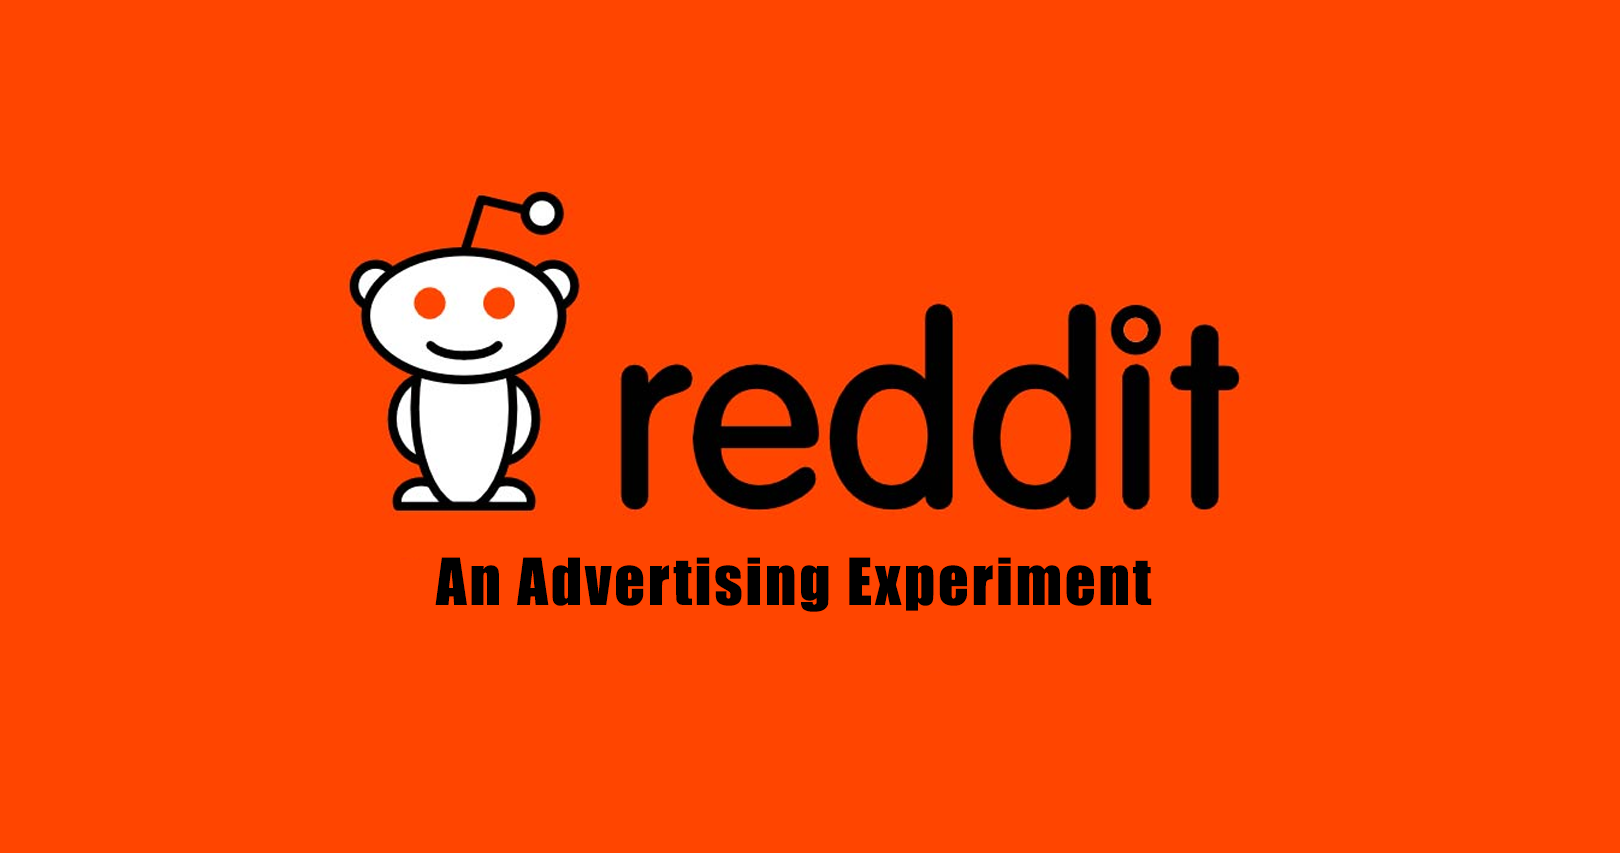 Is it worth advertising on reddit?